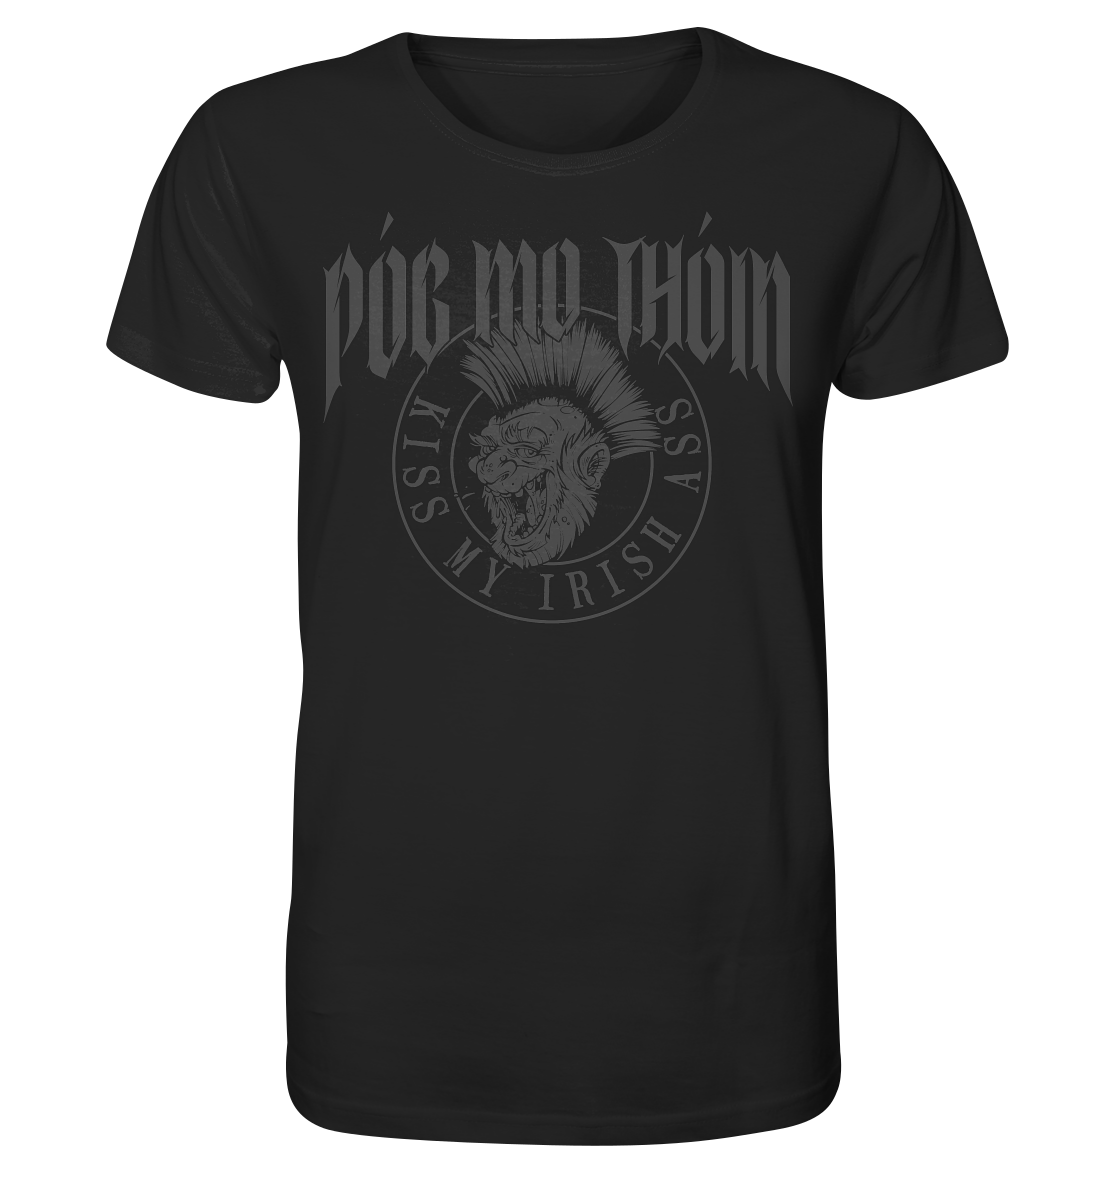 Póg Mo Thóin Streetwear "Kiss My Irish Ass" - Organic Shirt